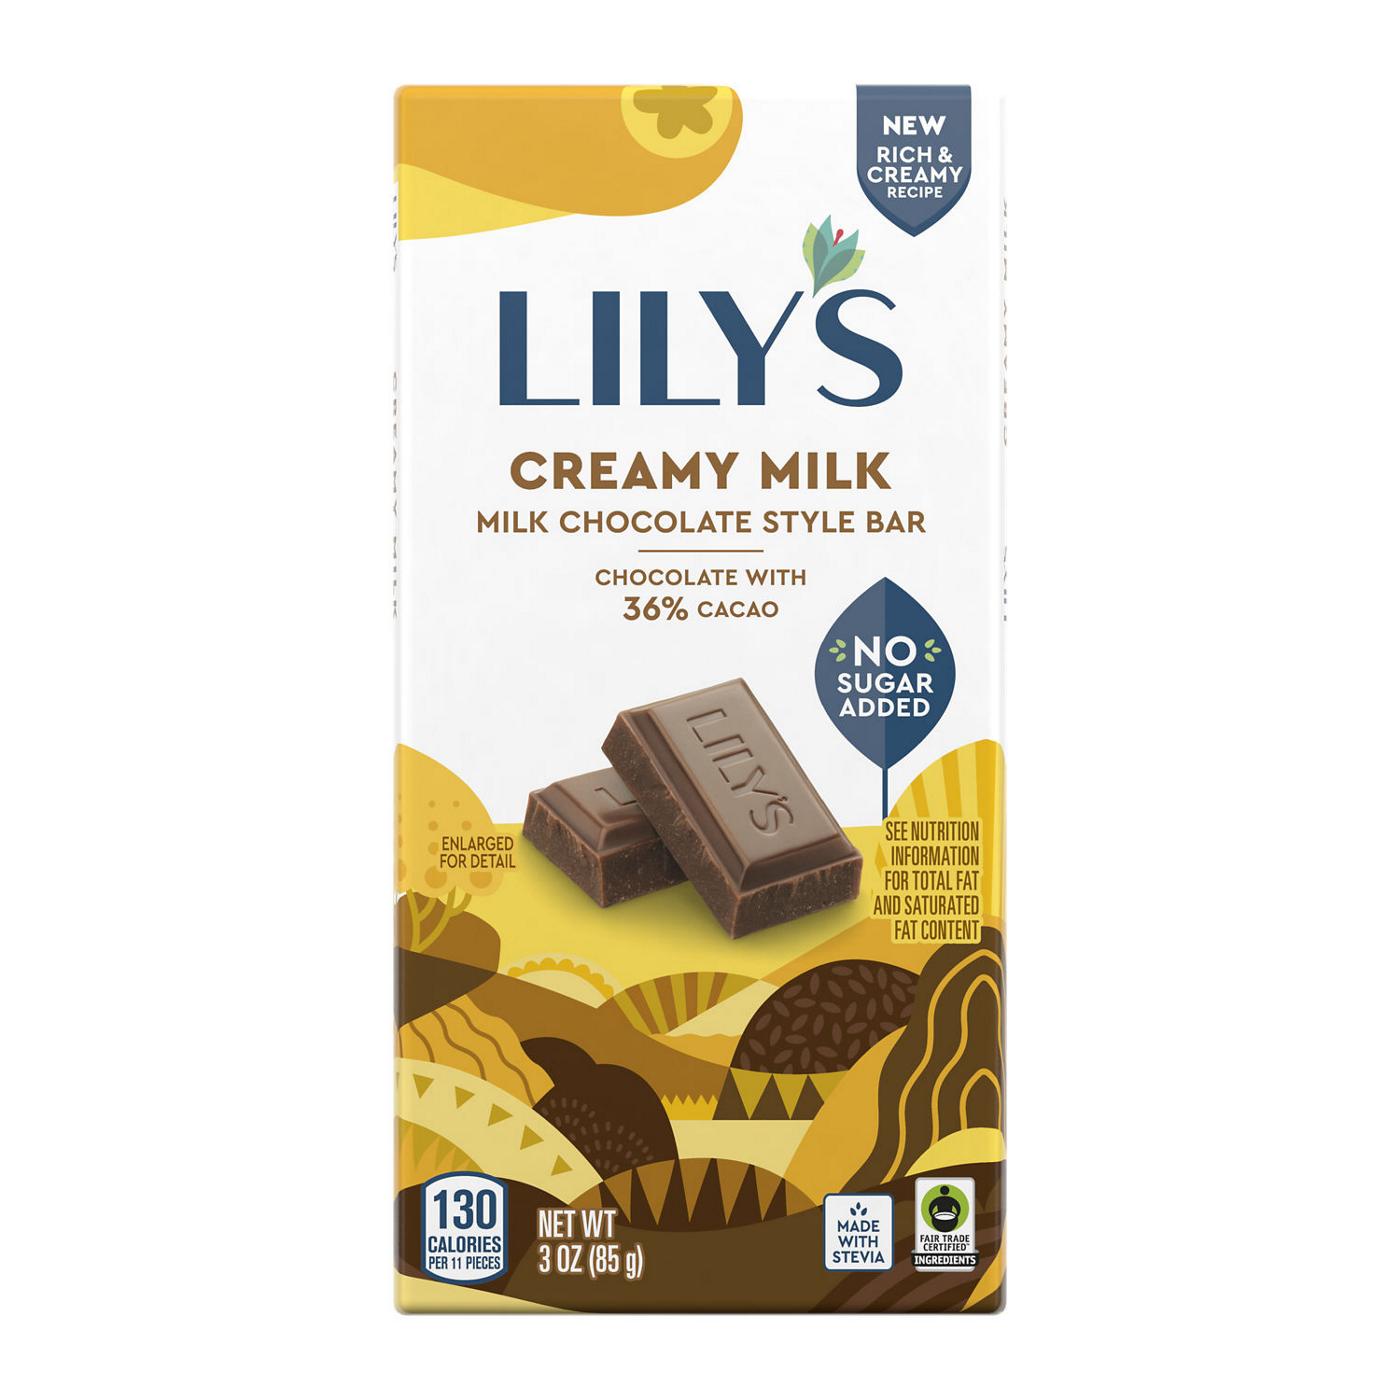 Lily's Creamy Milk Chocolate Style Bar; image 1 of 6